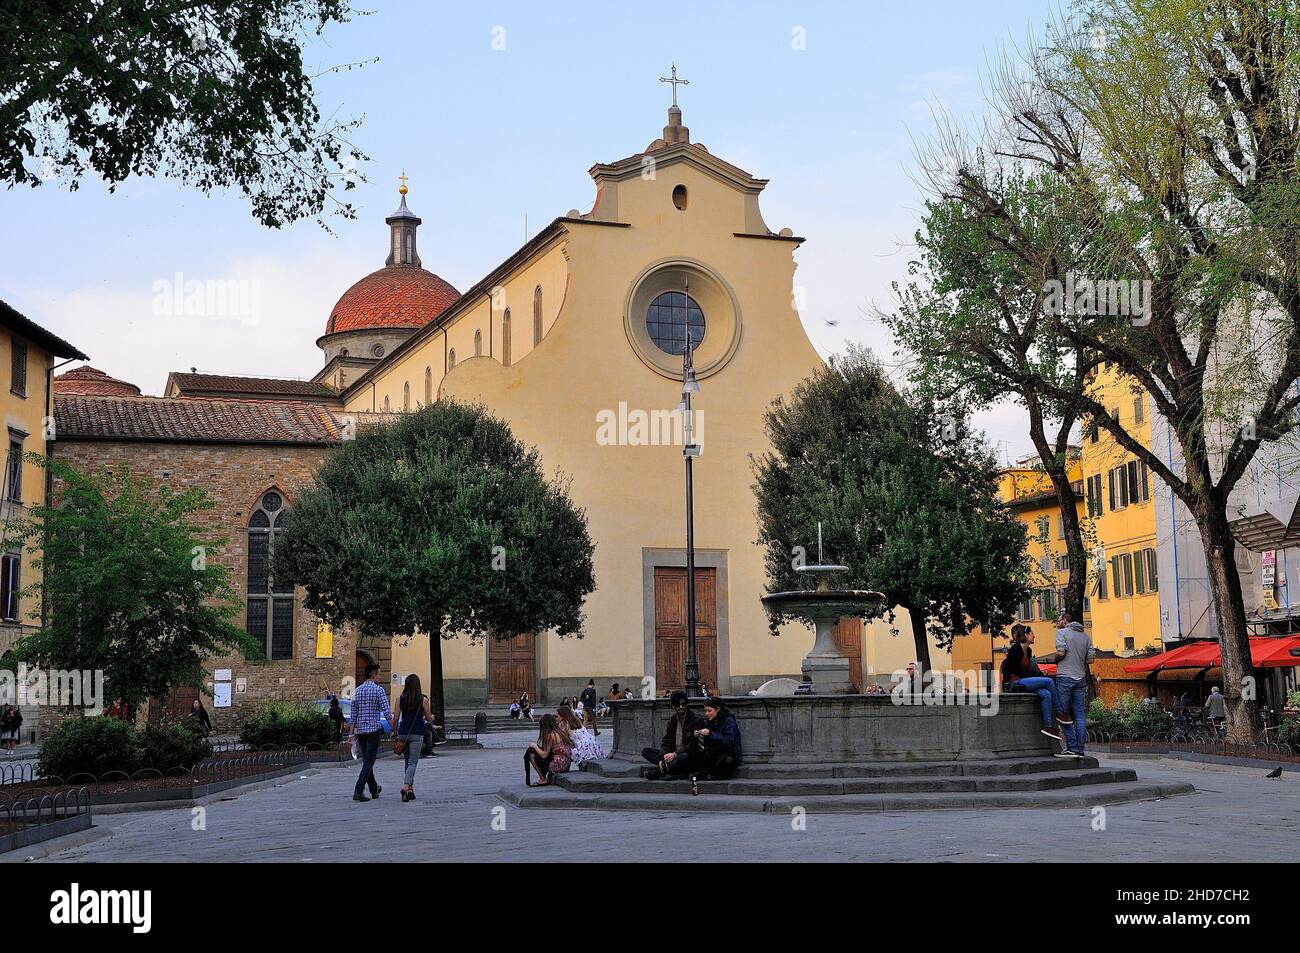 Santo Spirito basilica and square. Florencia. Tuscany. Italy Stock Photo